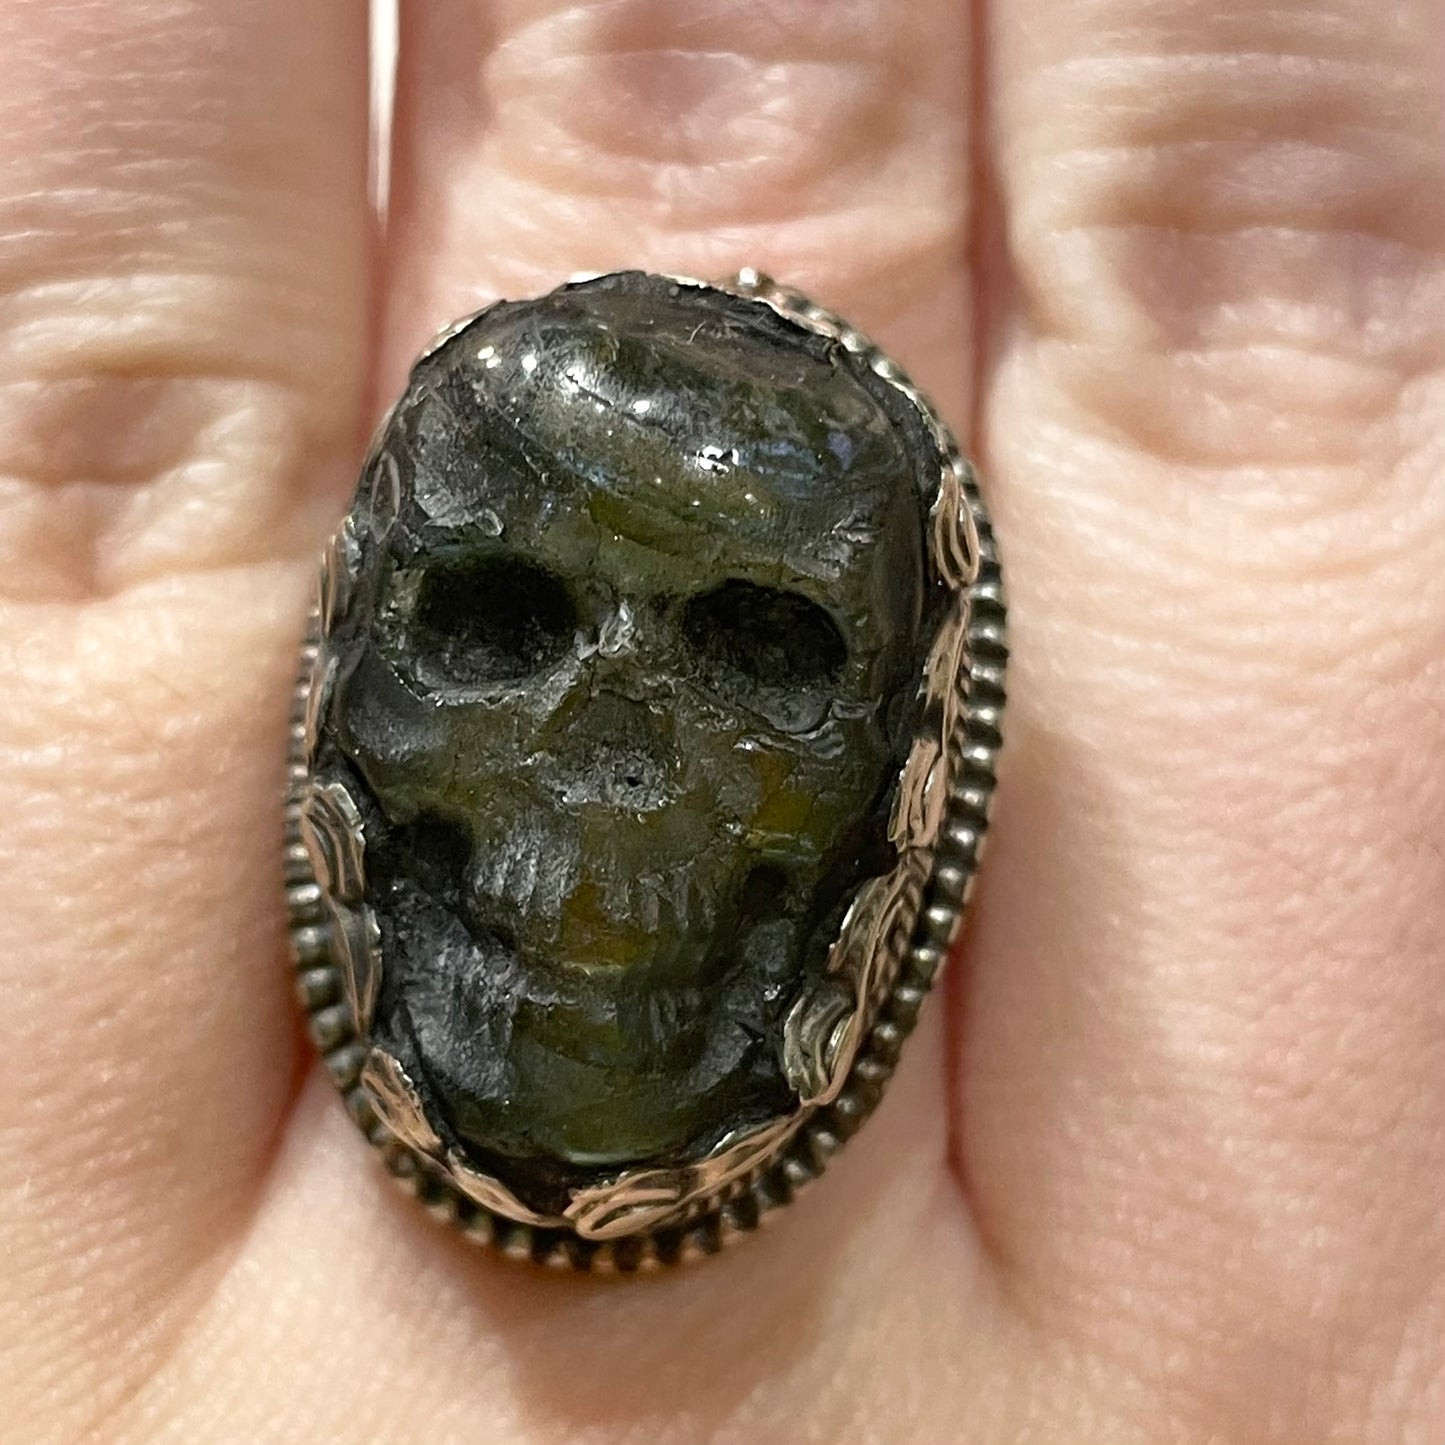 Skull carved Green Labradorite set in detailed Tibetan Silver ring on a model's finger